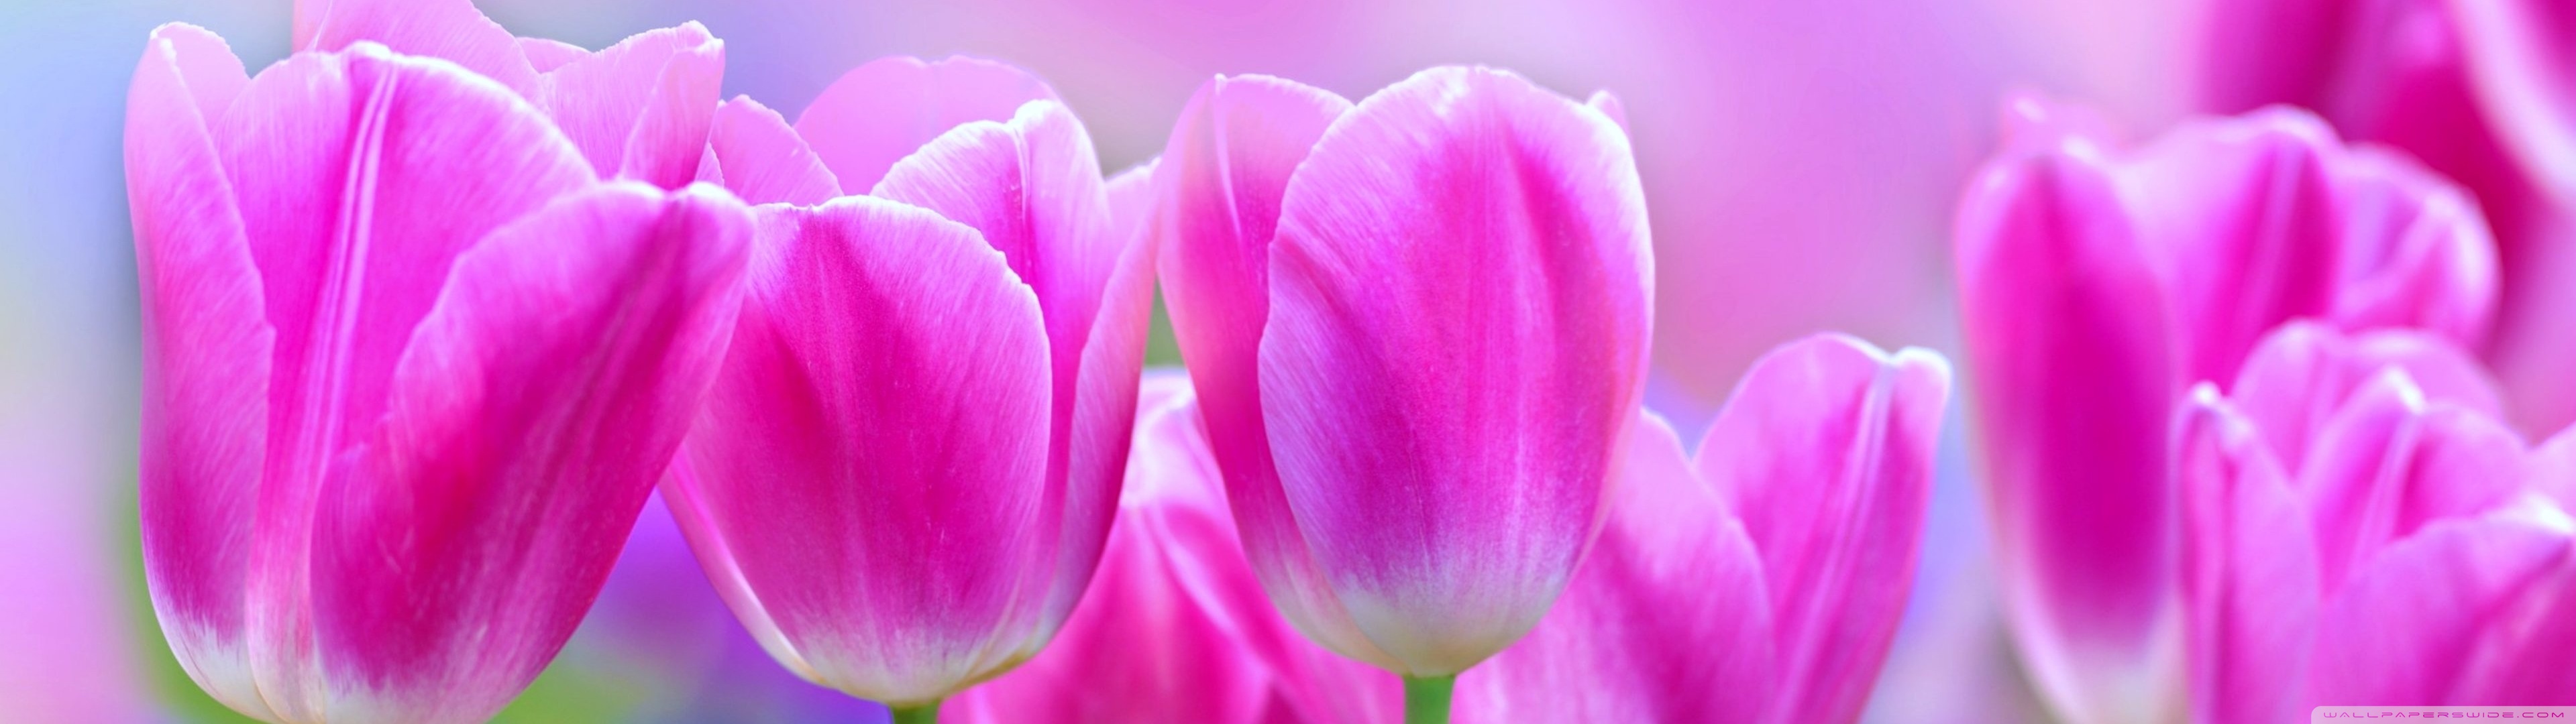 Vivid Colors Tulips, Spring Ultra HD Desktop Background Wallpaper for 4K UHD TV, Multi Display, Dual Monitor, Tablet